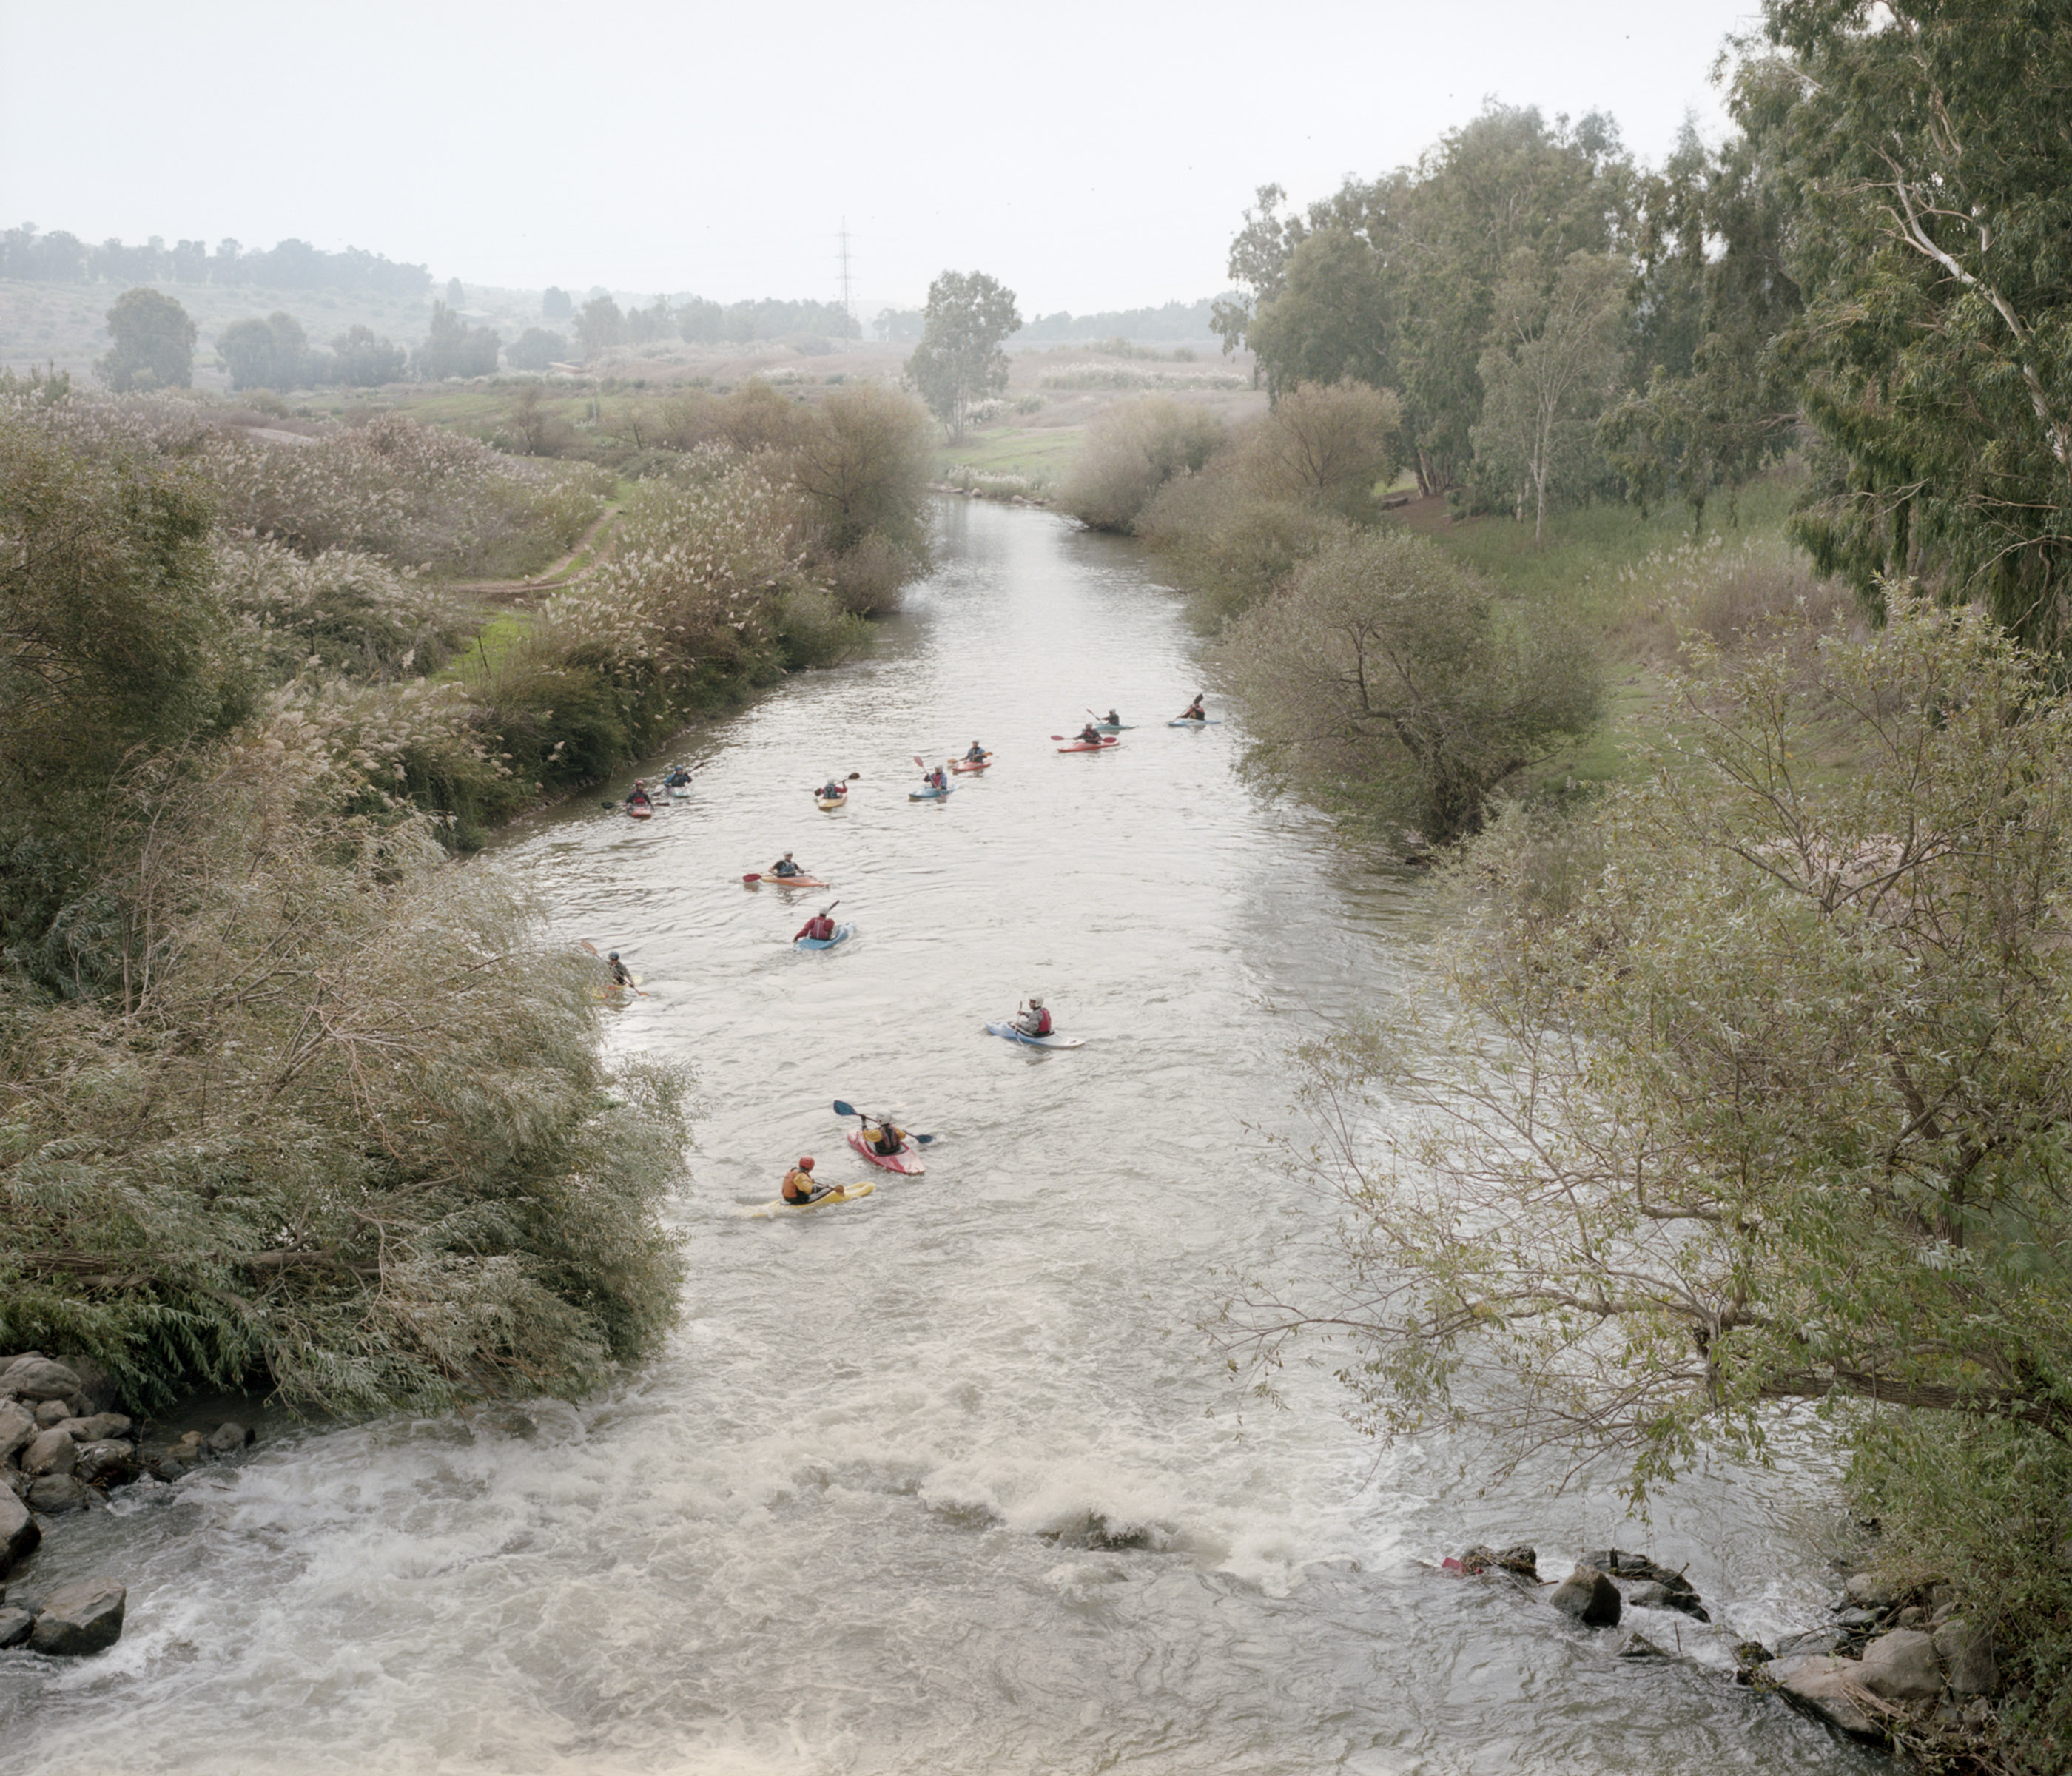 Canoeists on Jordan River, Israel, 2013, fotografía color, 40 X 46,6 cm.